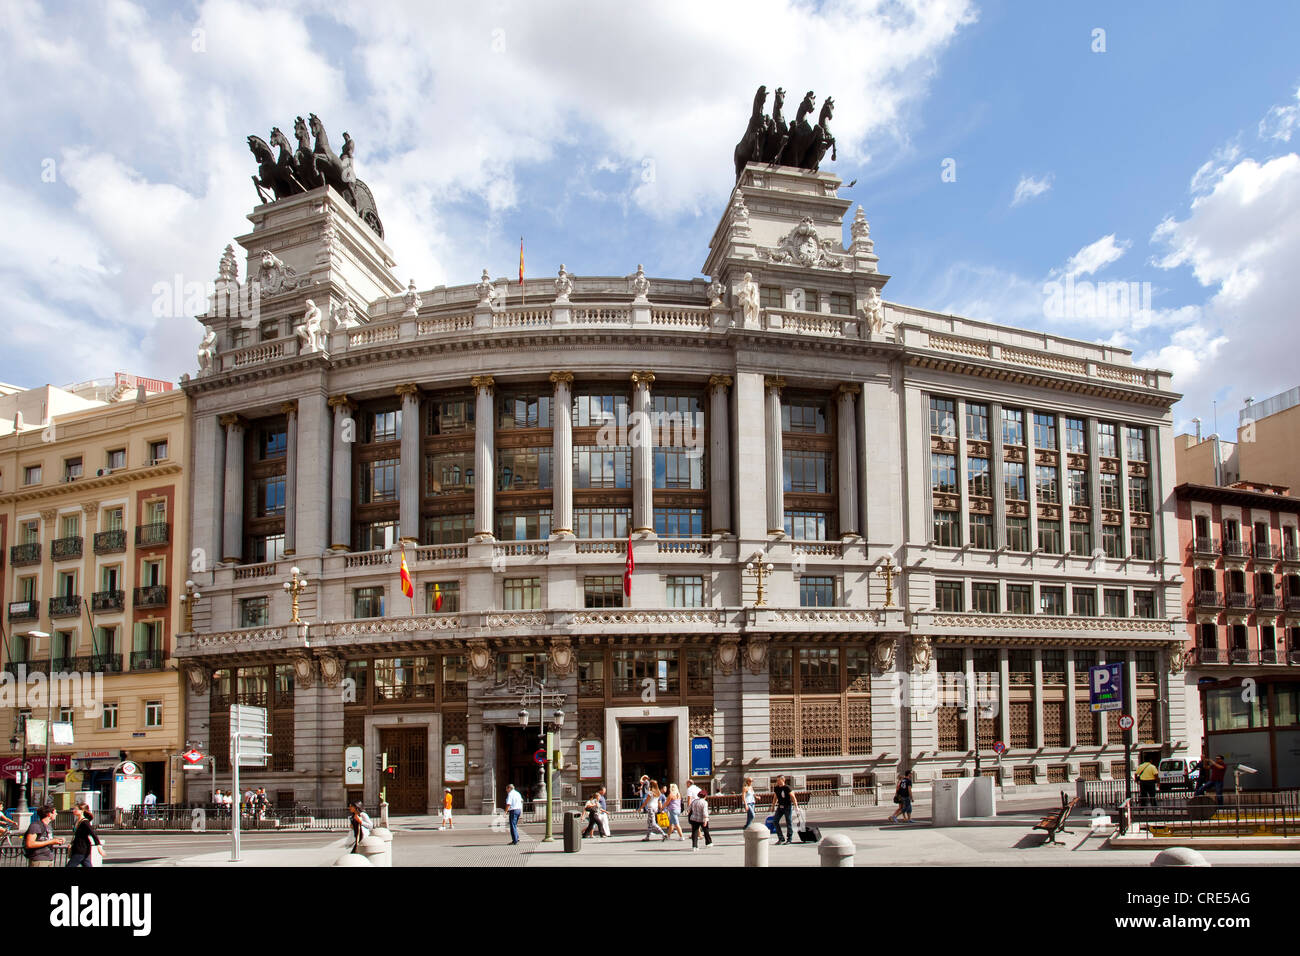 Filiale della Banca spagnola BBVA, Banco Bilbao Vizcaya Argentaria, in un edificio storico a Madrid, Spagna, Europa Foto Stock